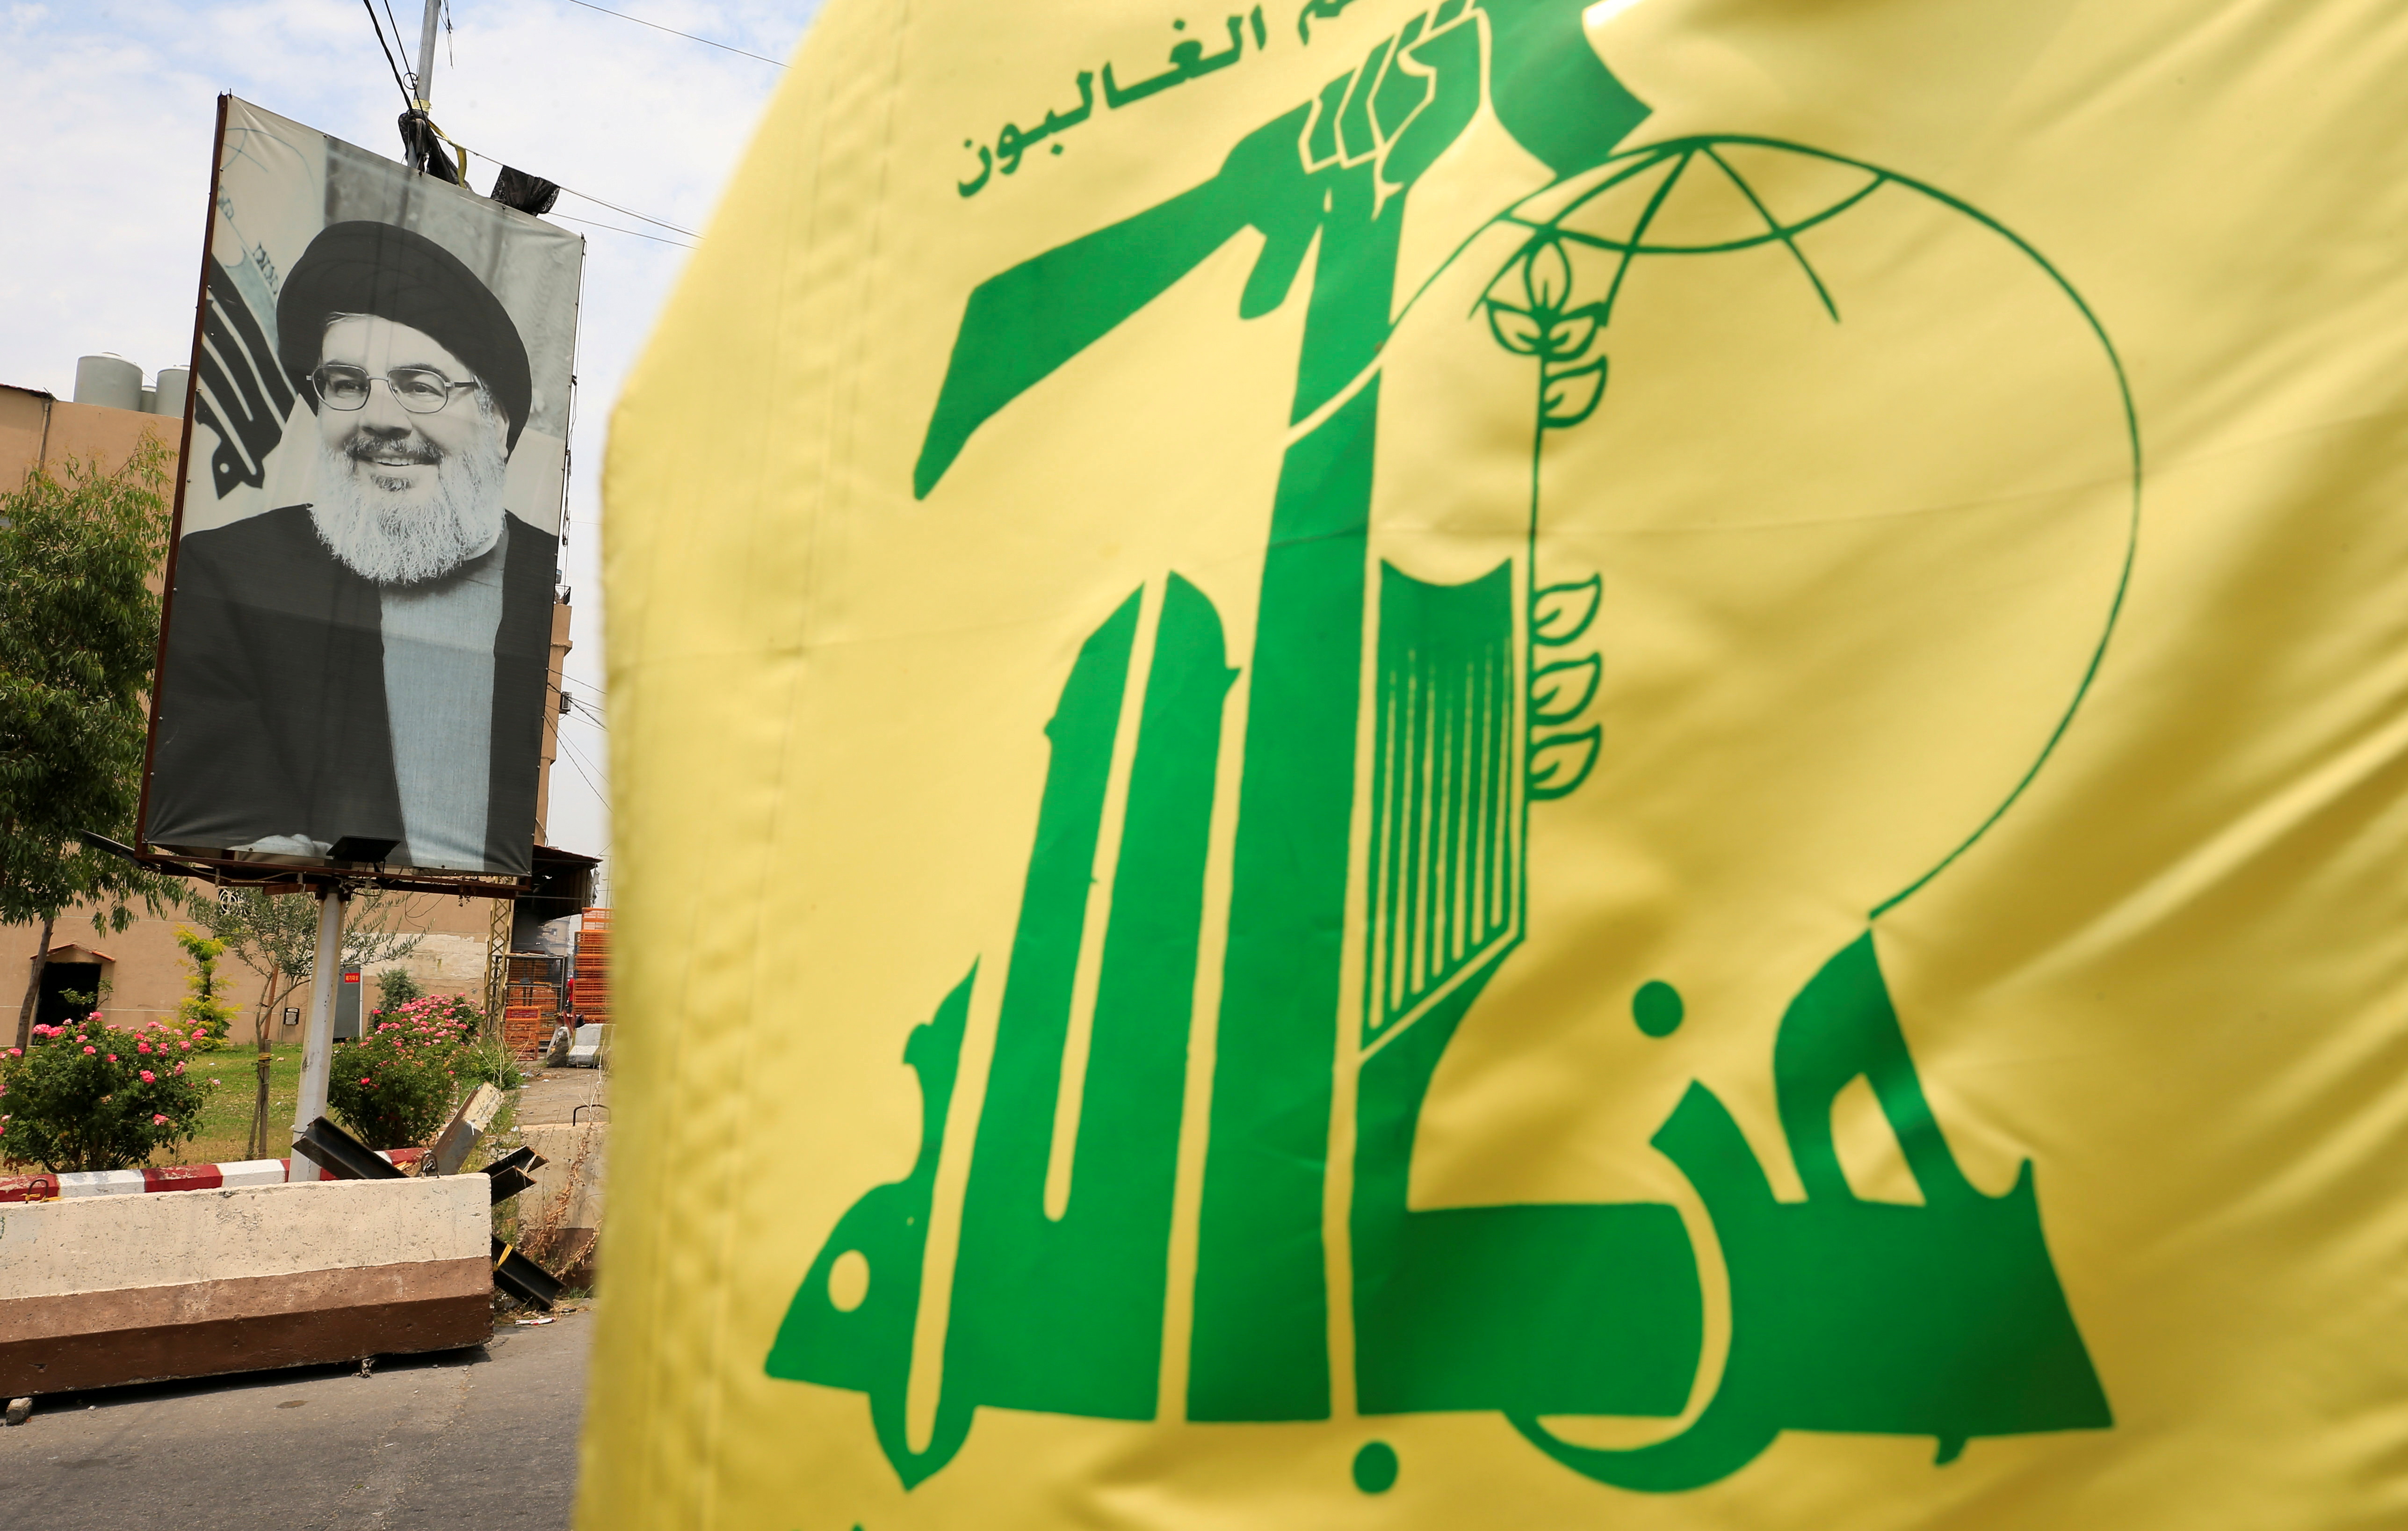 A Hezbollah flag and its leader, Sayyed Hassan Nasrallah, in Sidon, Lebanon (File/Reuters)